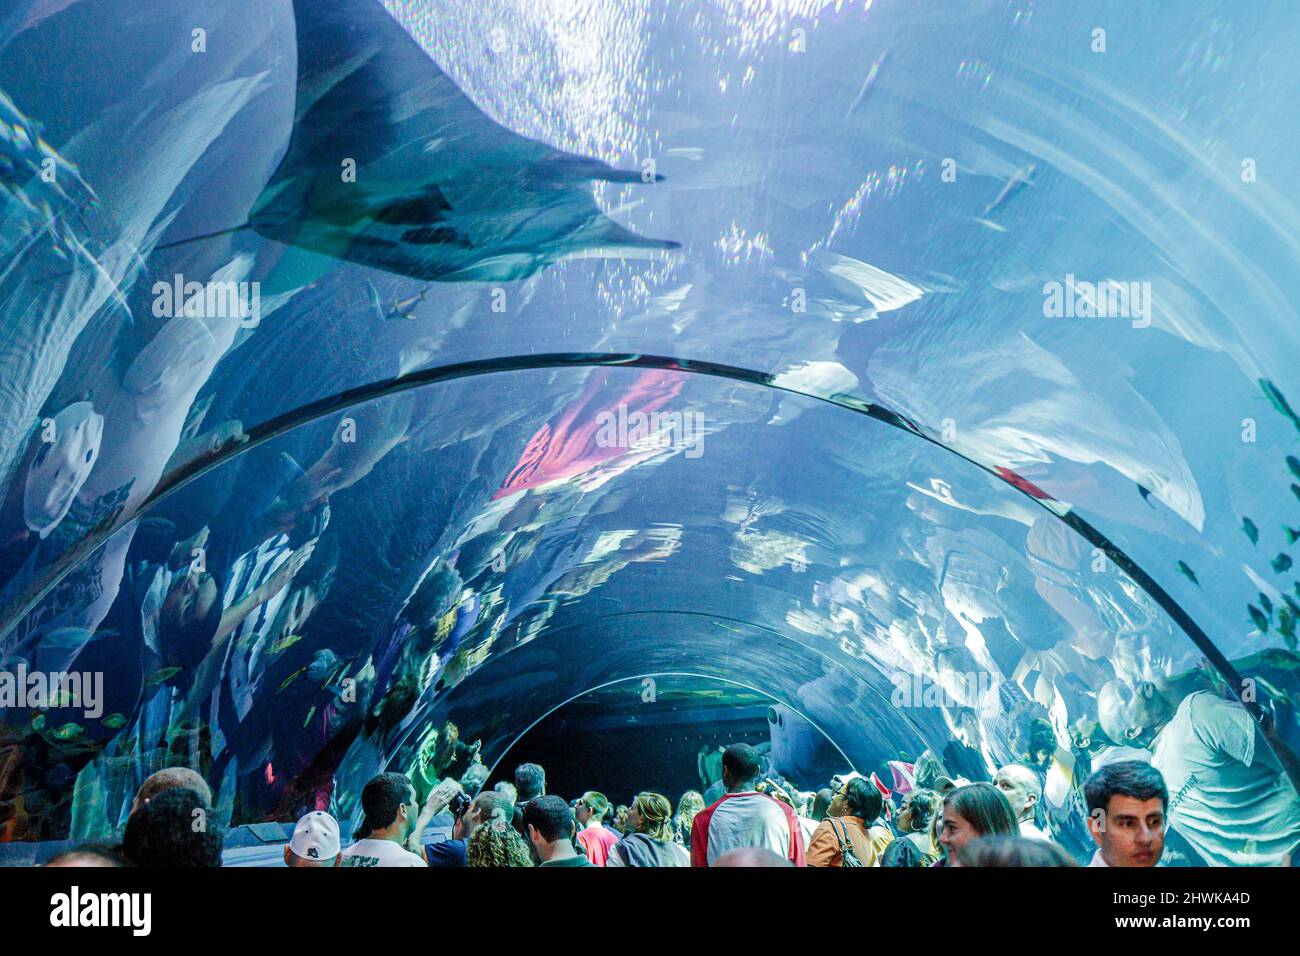 Atlanta Georgia, Pemberton Place, Georgia Aquarium, pesci d'acqua salata, la più grande vasca del mondo Ocean Voyager tunnel Manta ray subacquea Foto Stock